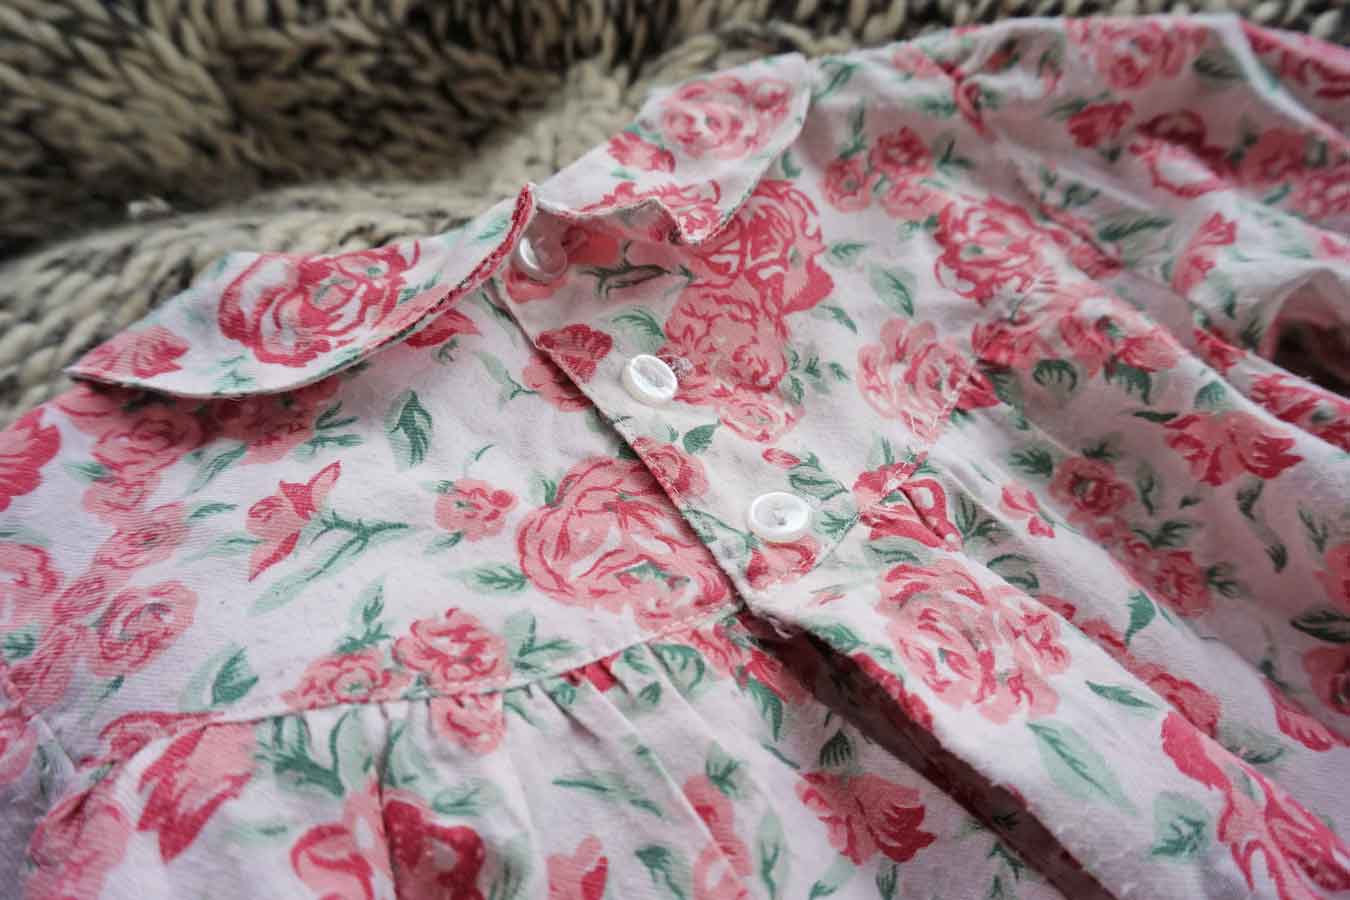 Vintage Baby Girls Pink Floral Easter Dress - vintage childrenswear clothing - ada's attic vintage